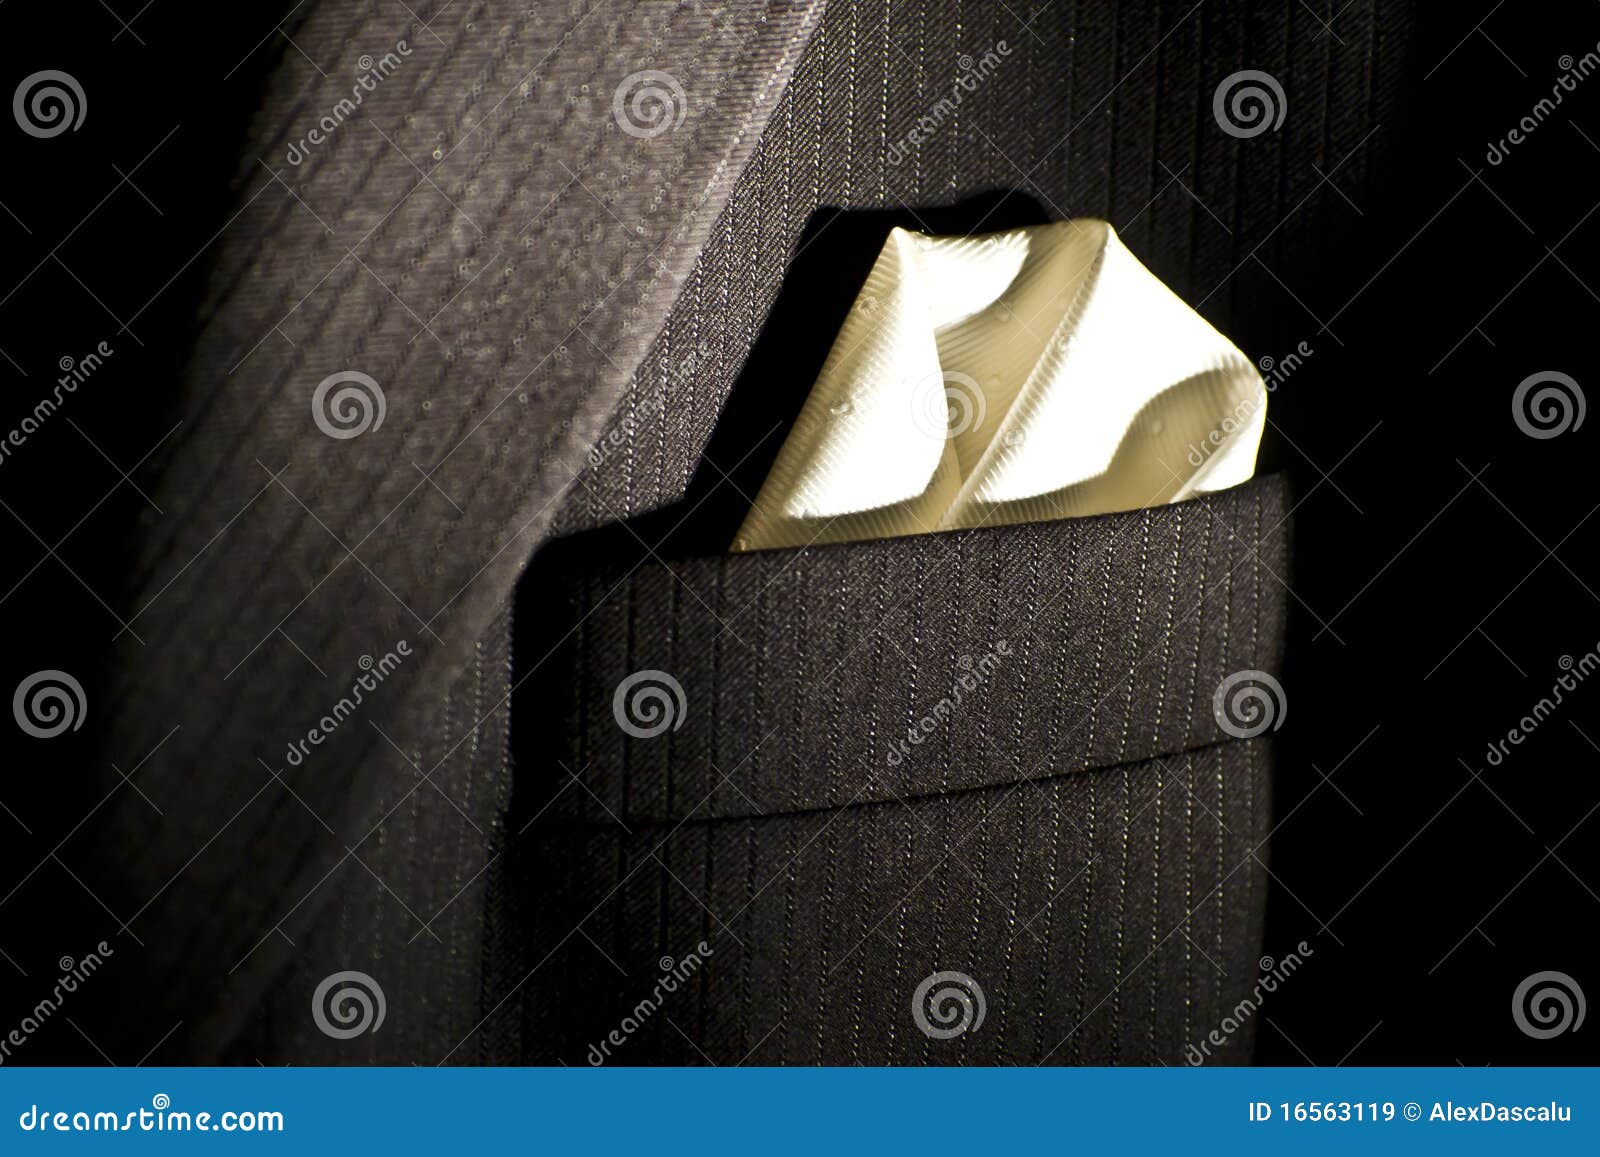 a suit handkerchief